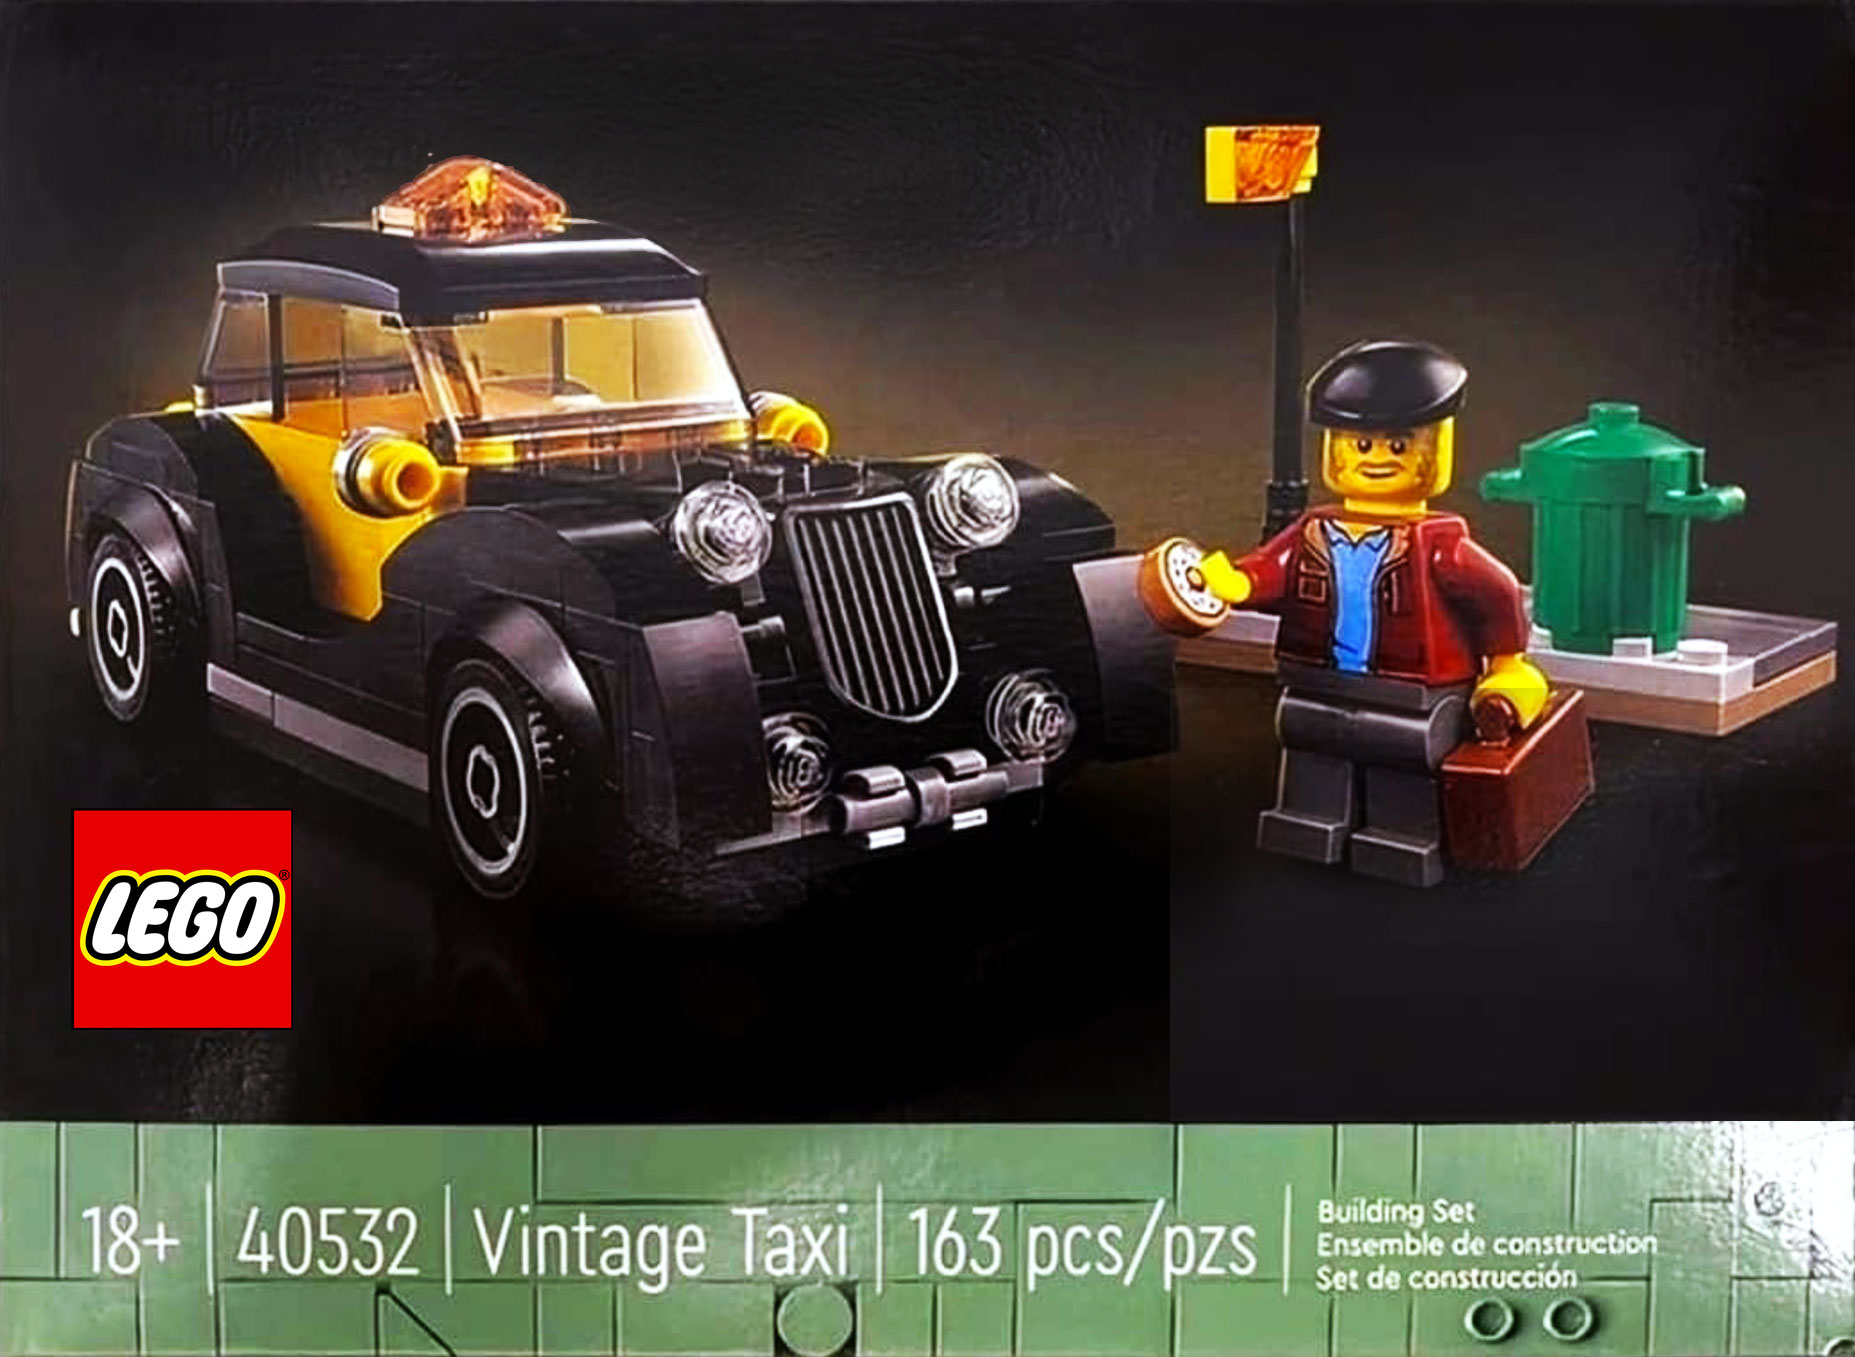 lego-vintage-taxi-40532-03.jpg